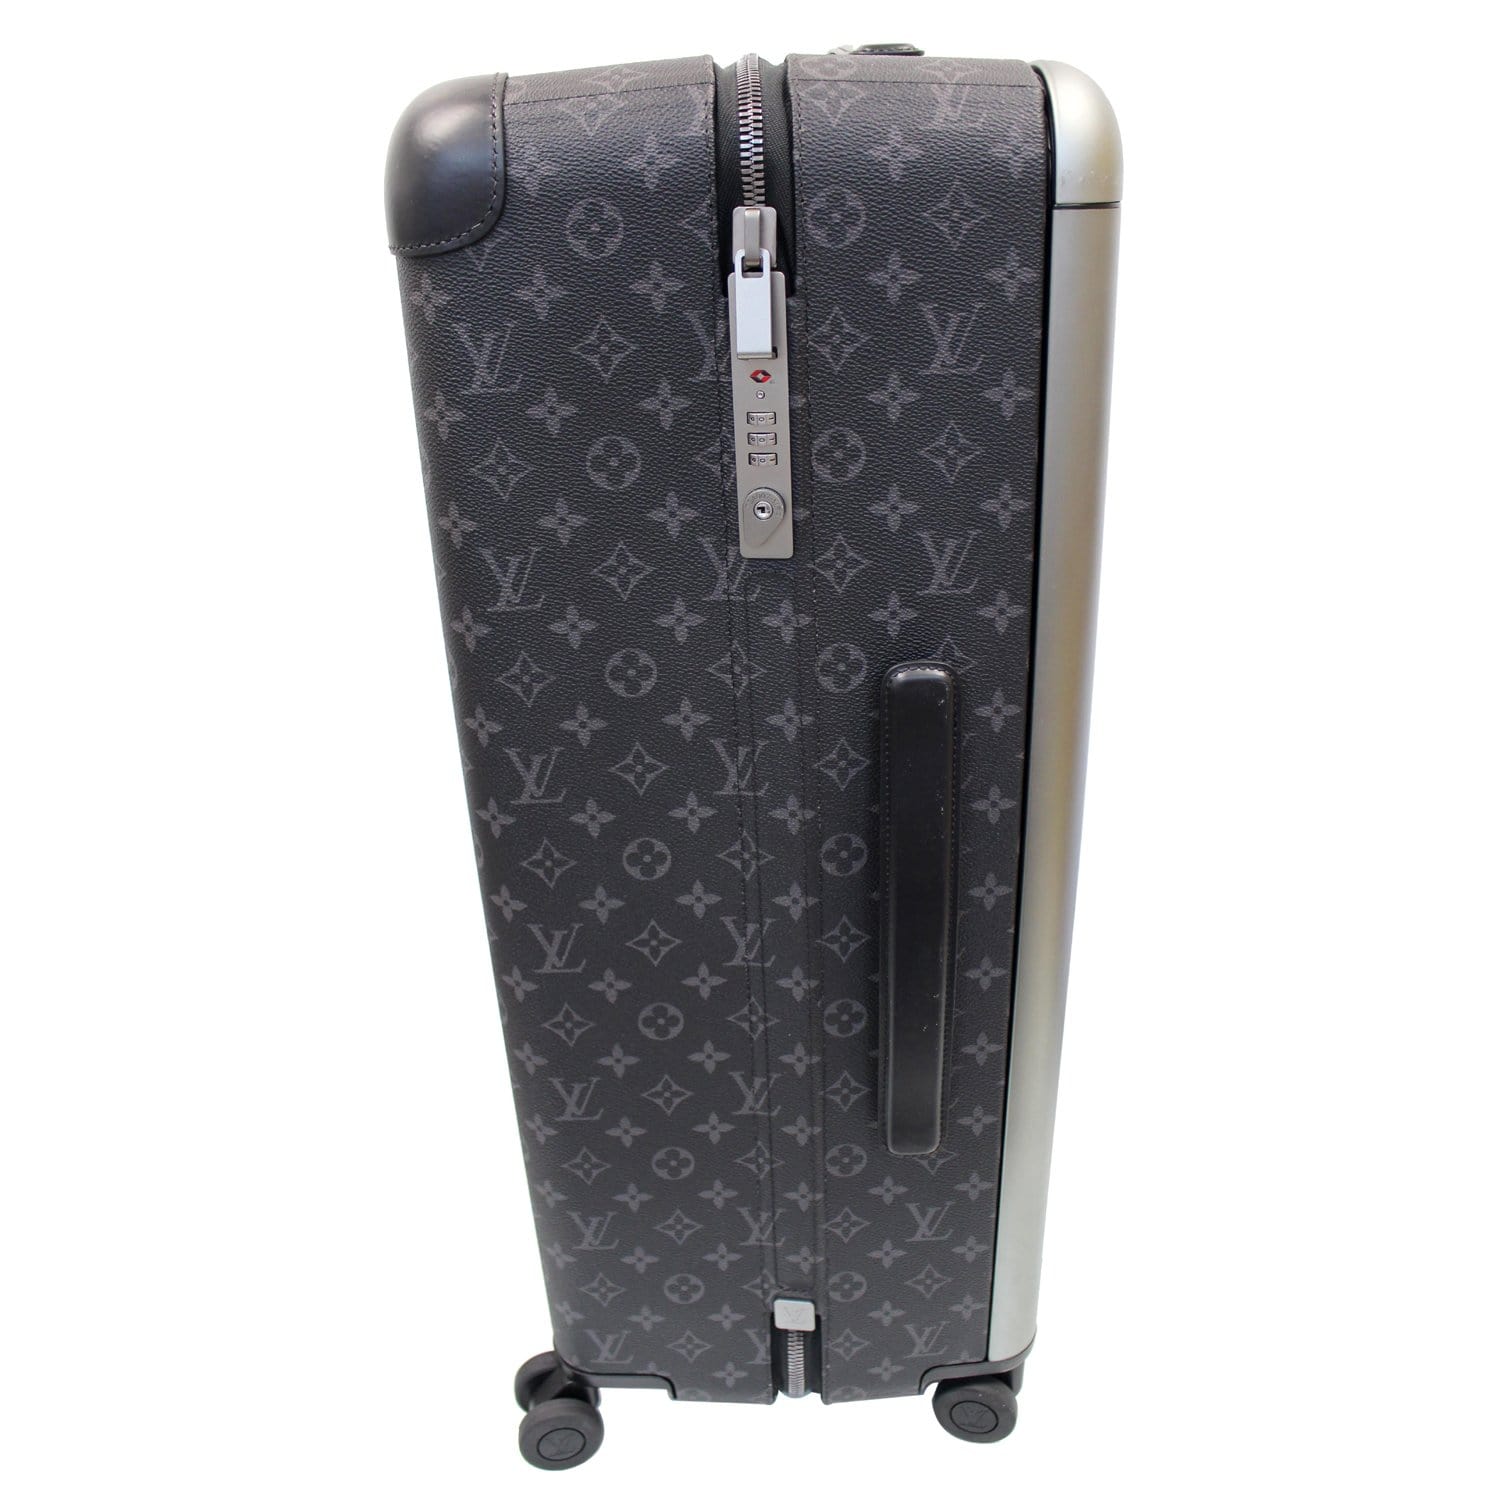 Louis Vuitton Monogram Canvas Satellite Suitcase 70 Louis Vuitton